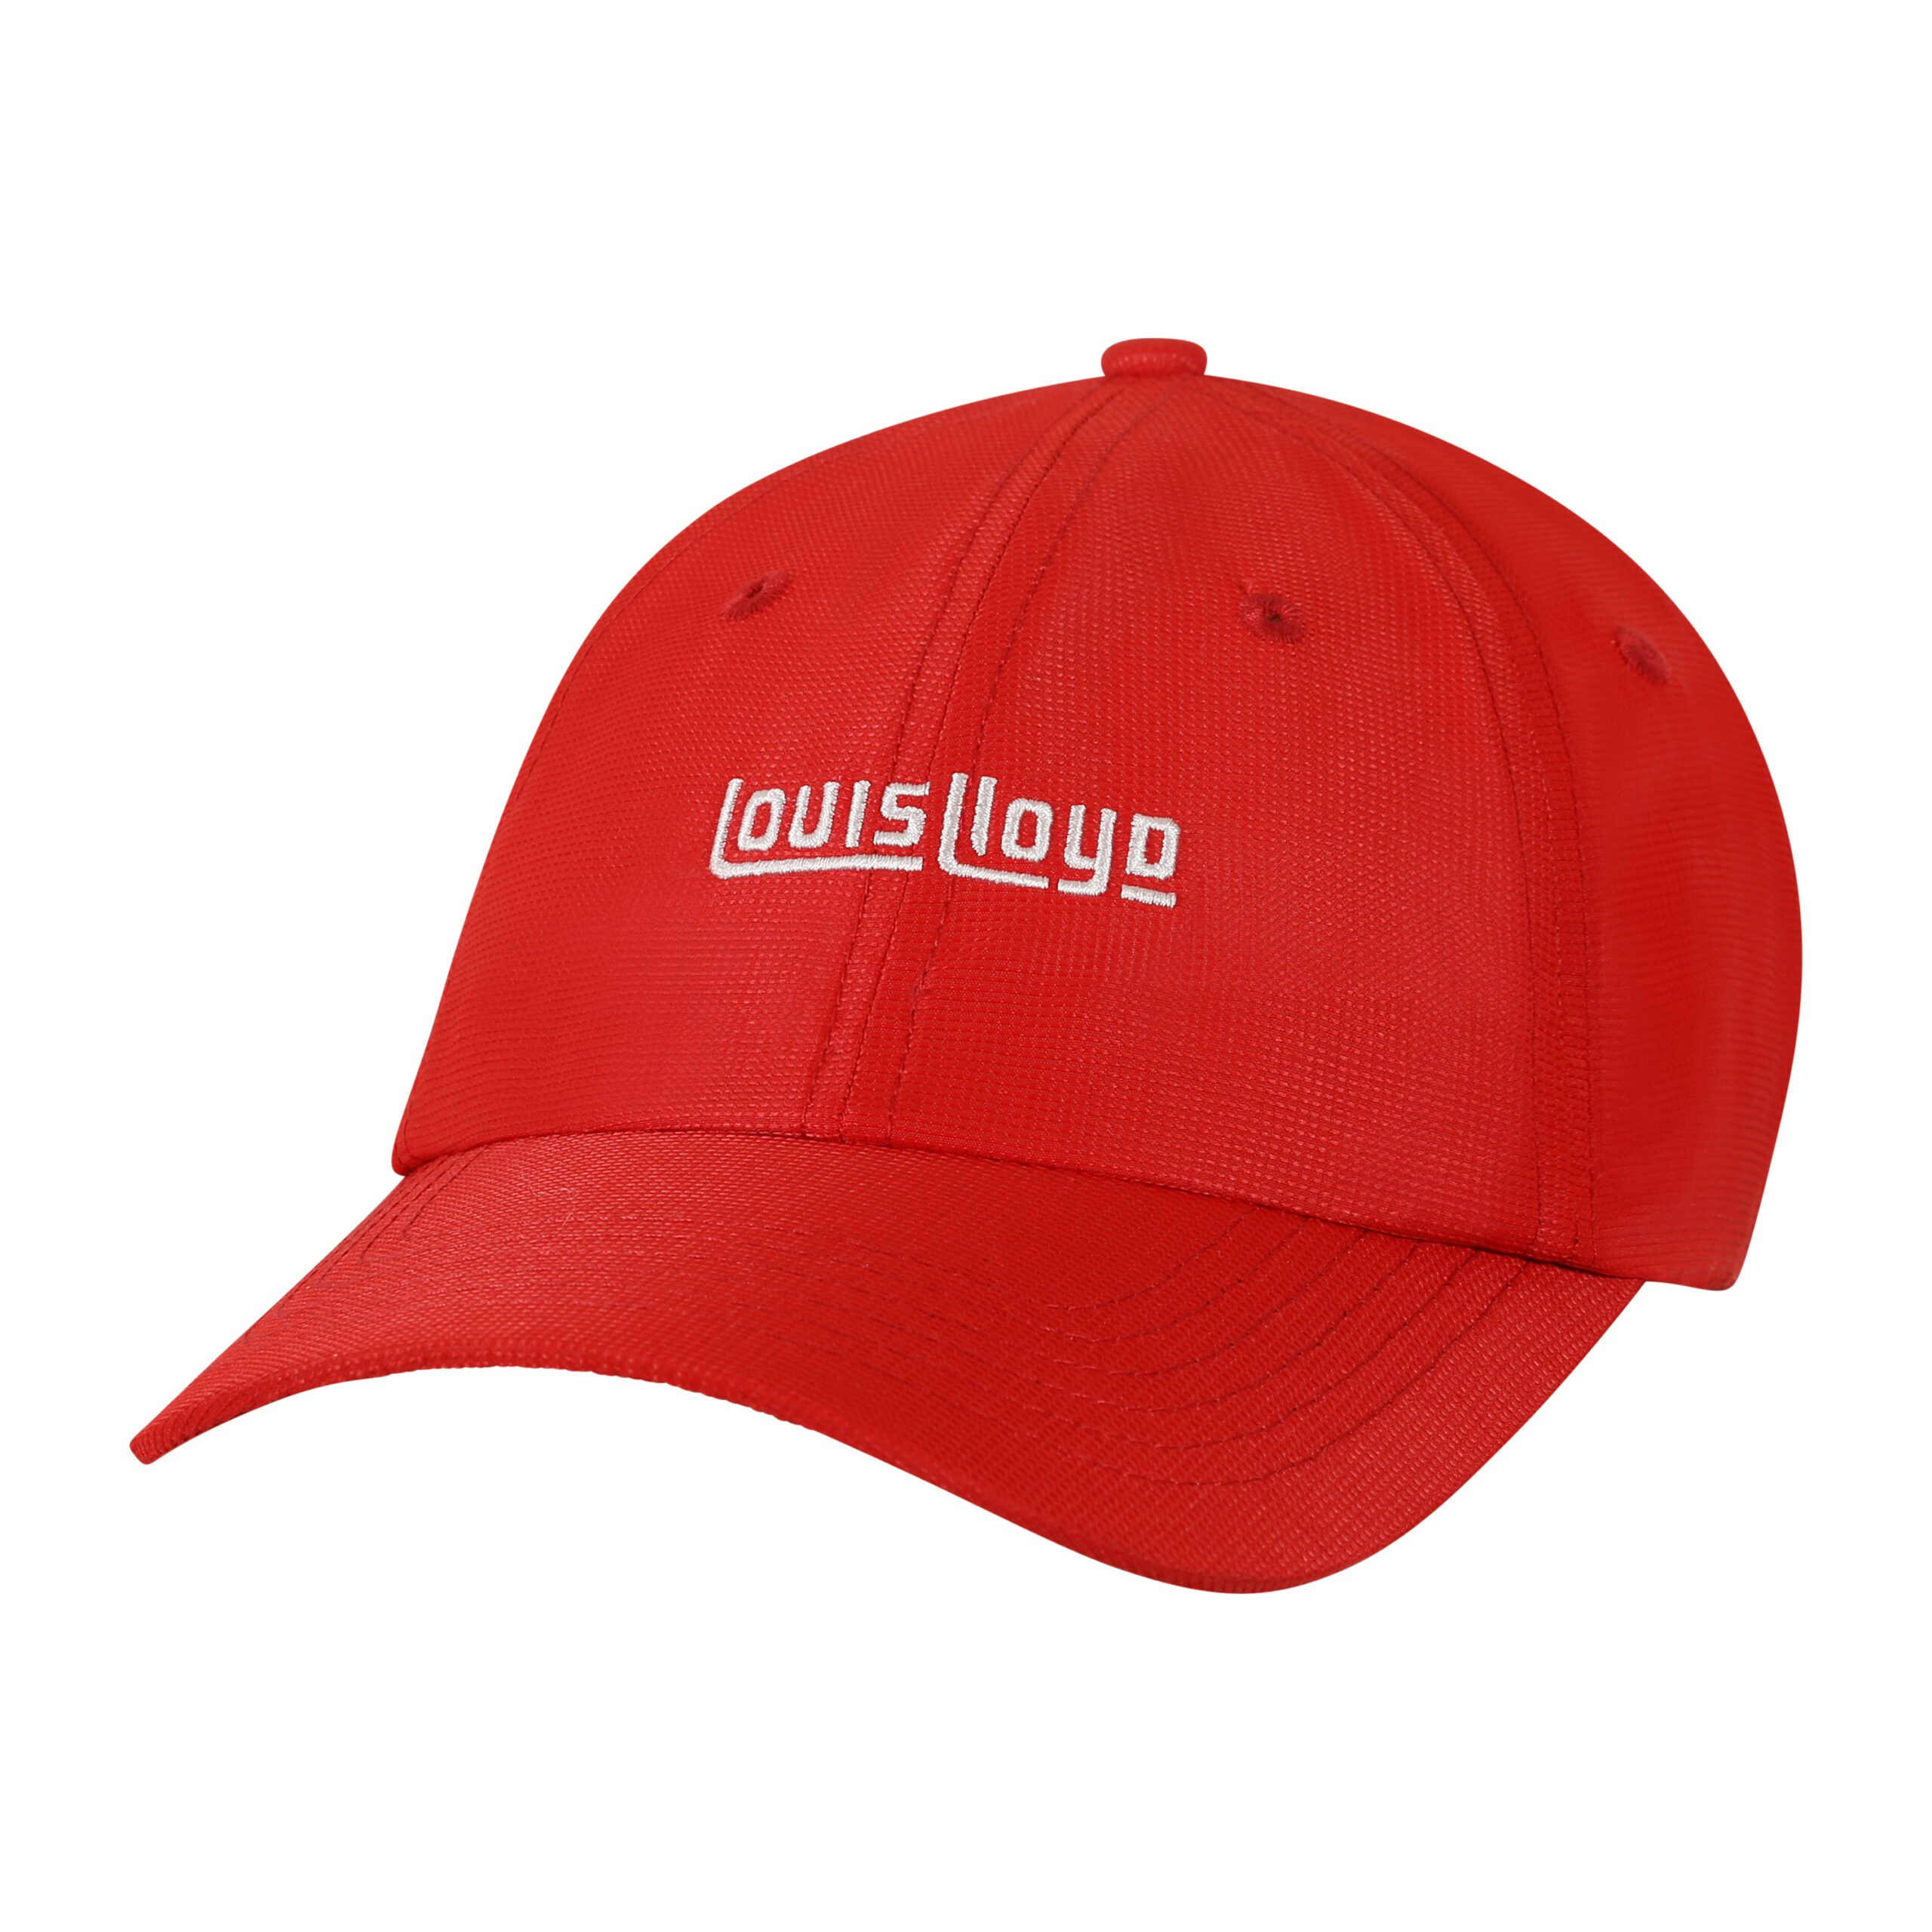 Red Wordmark Performance Hat | Louis Lloyd